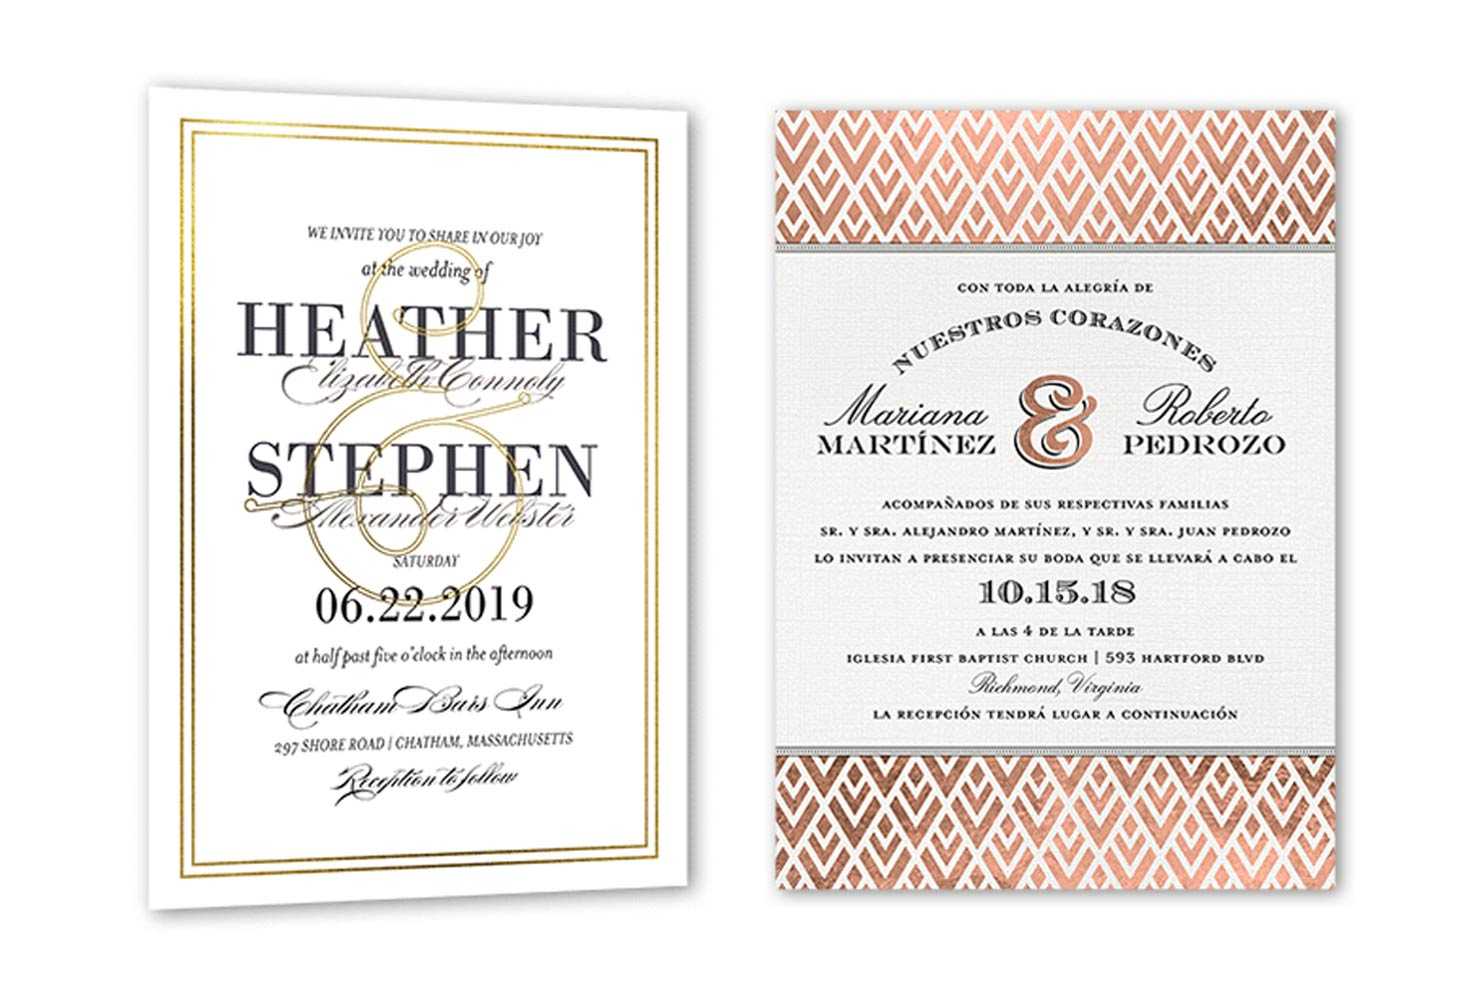 35+ Wedding Invitation Wording Examples 2019 | Shutterfly Inside Church Wedding Invitation Card Template